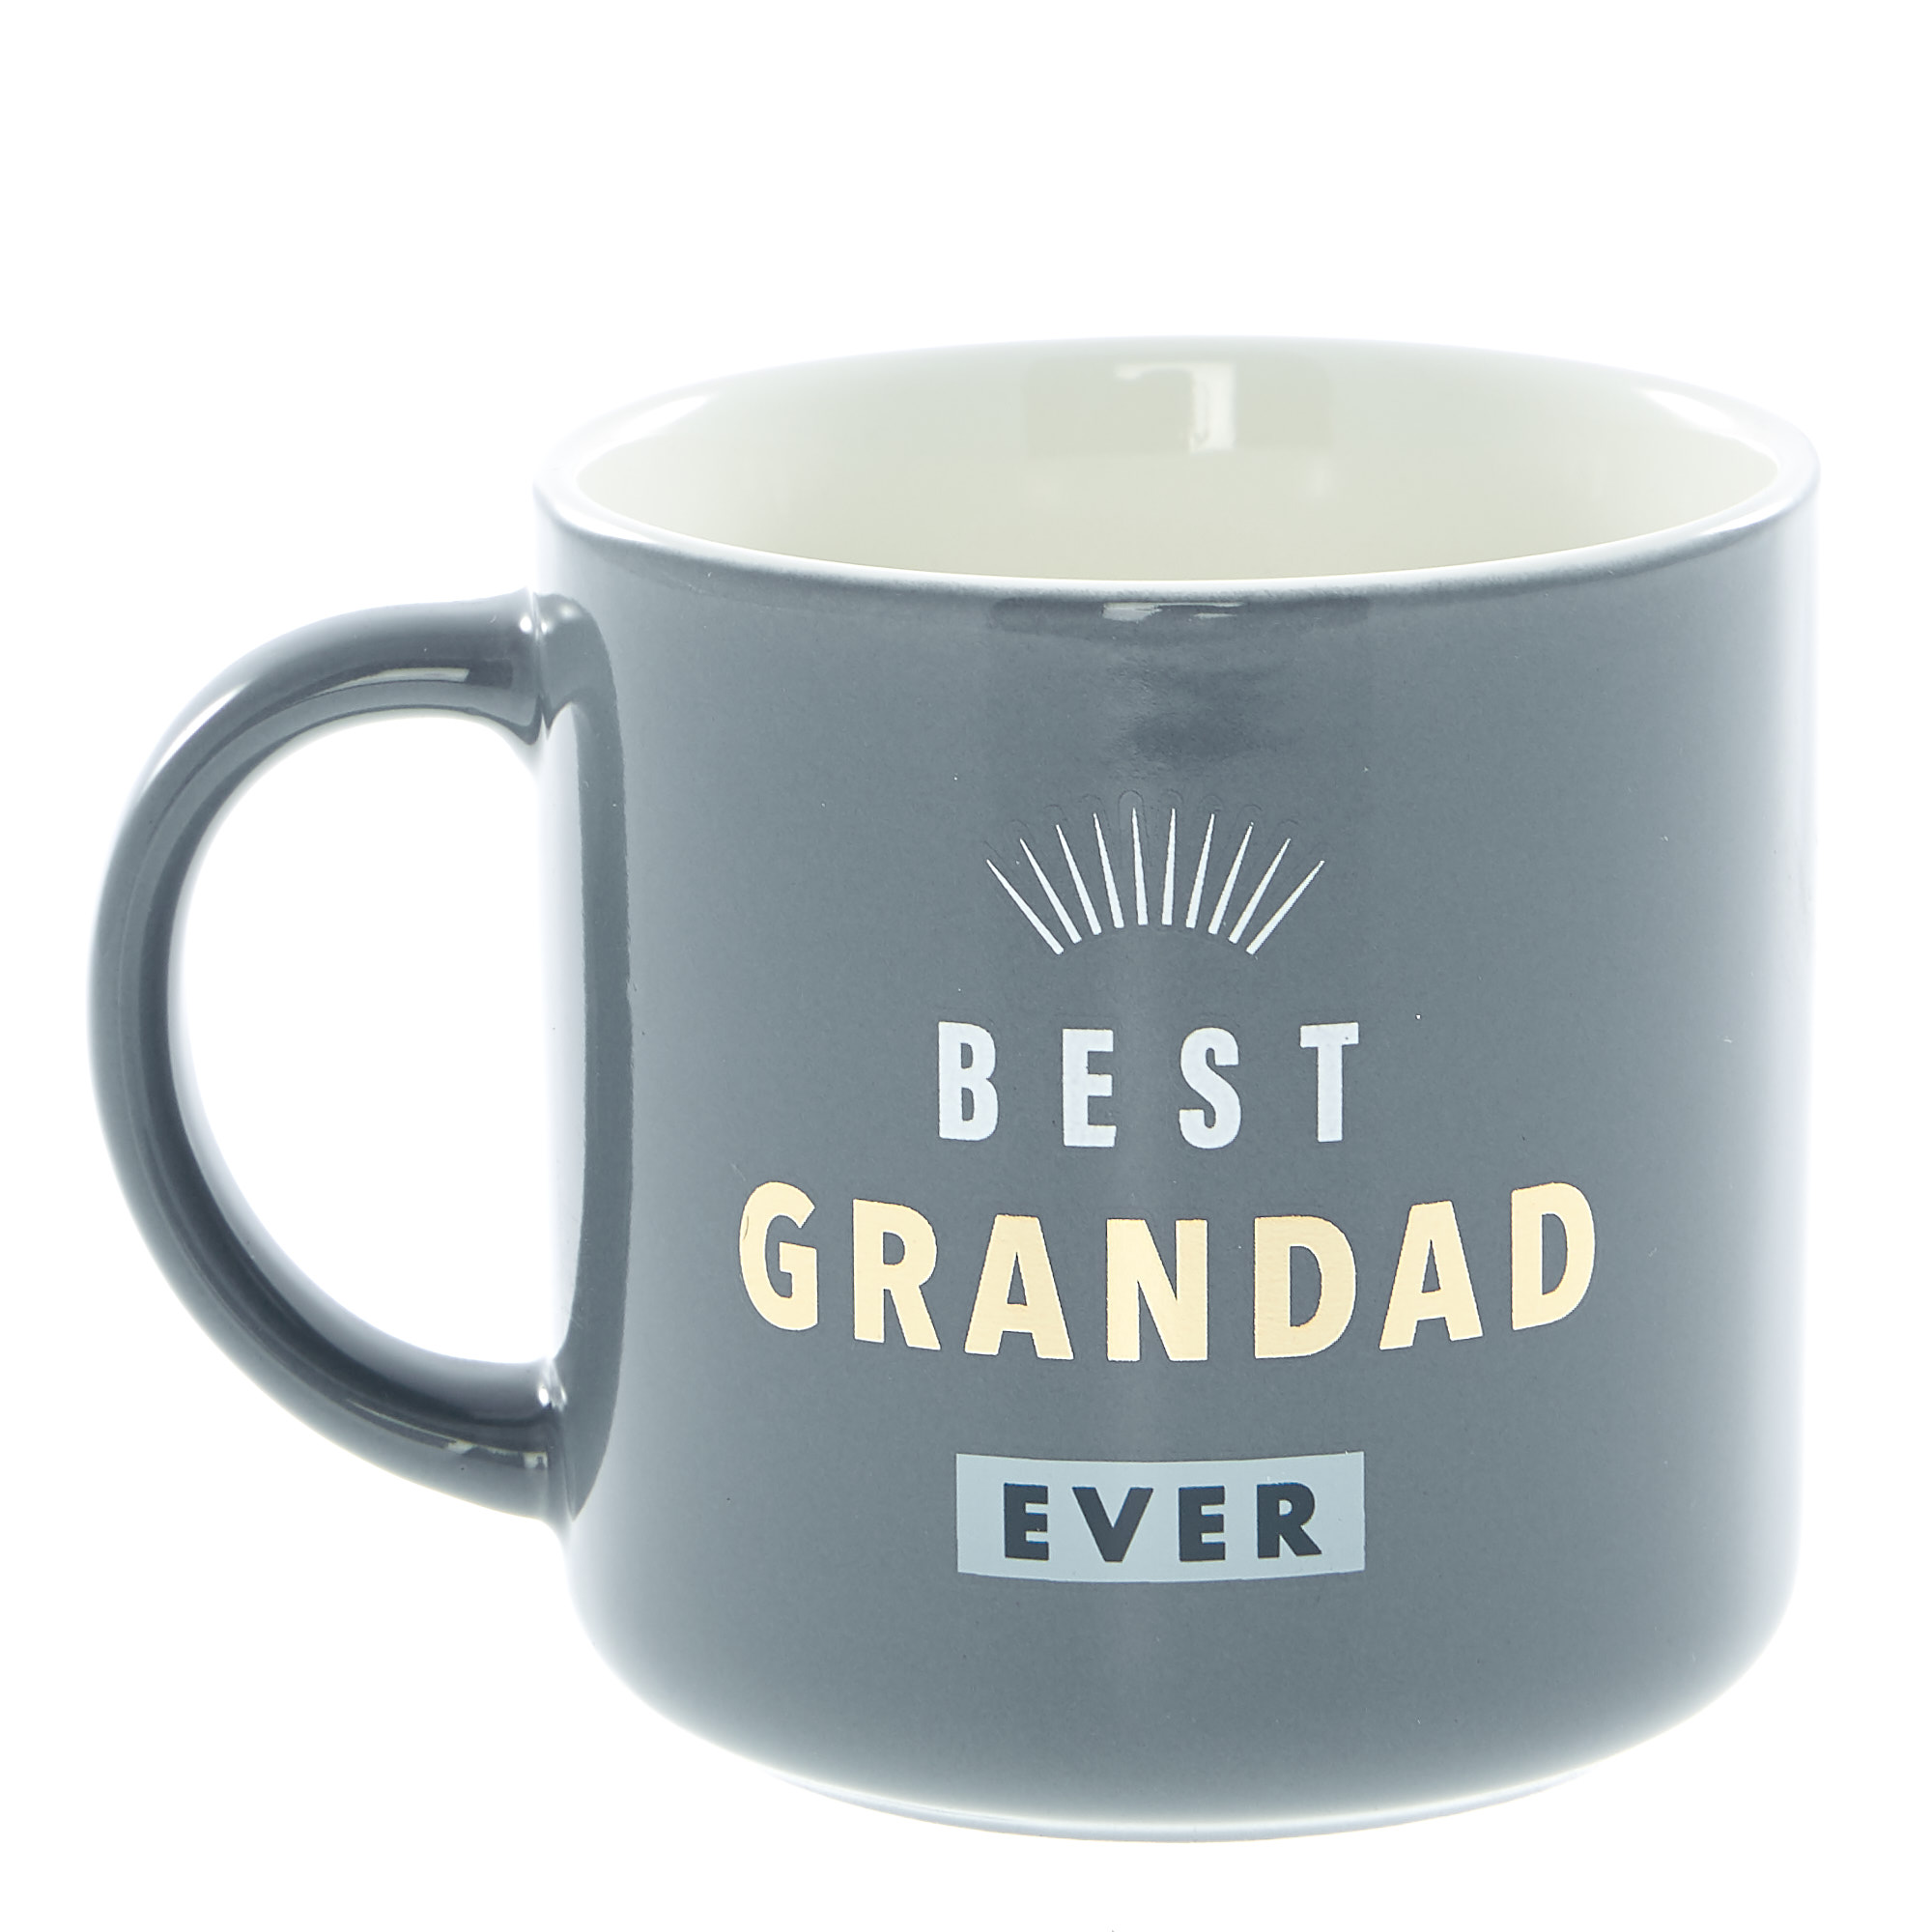 Grandad Simply The Best Mug In A Box 